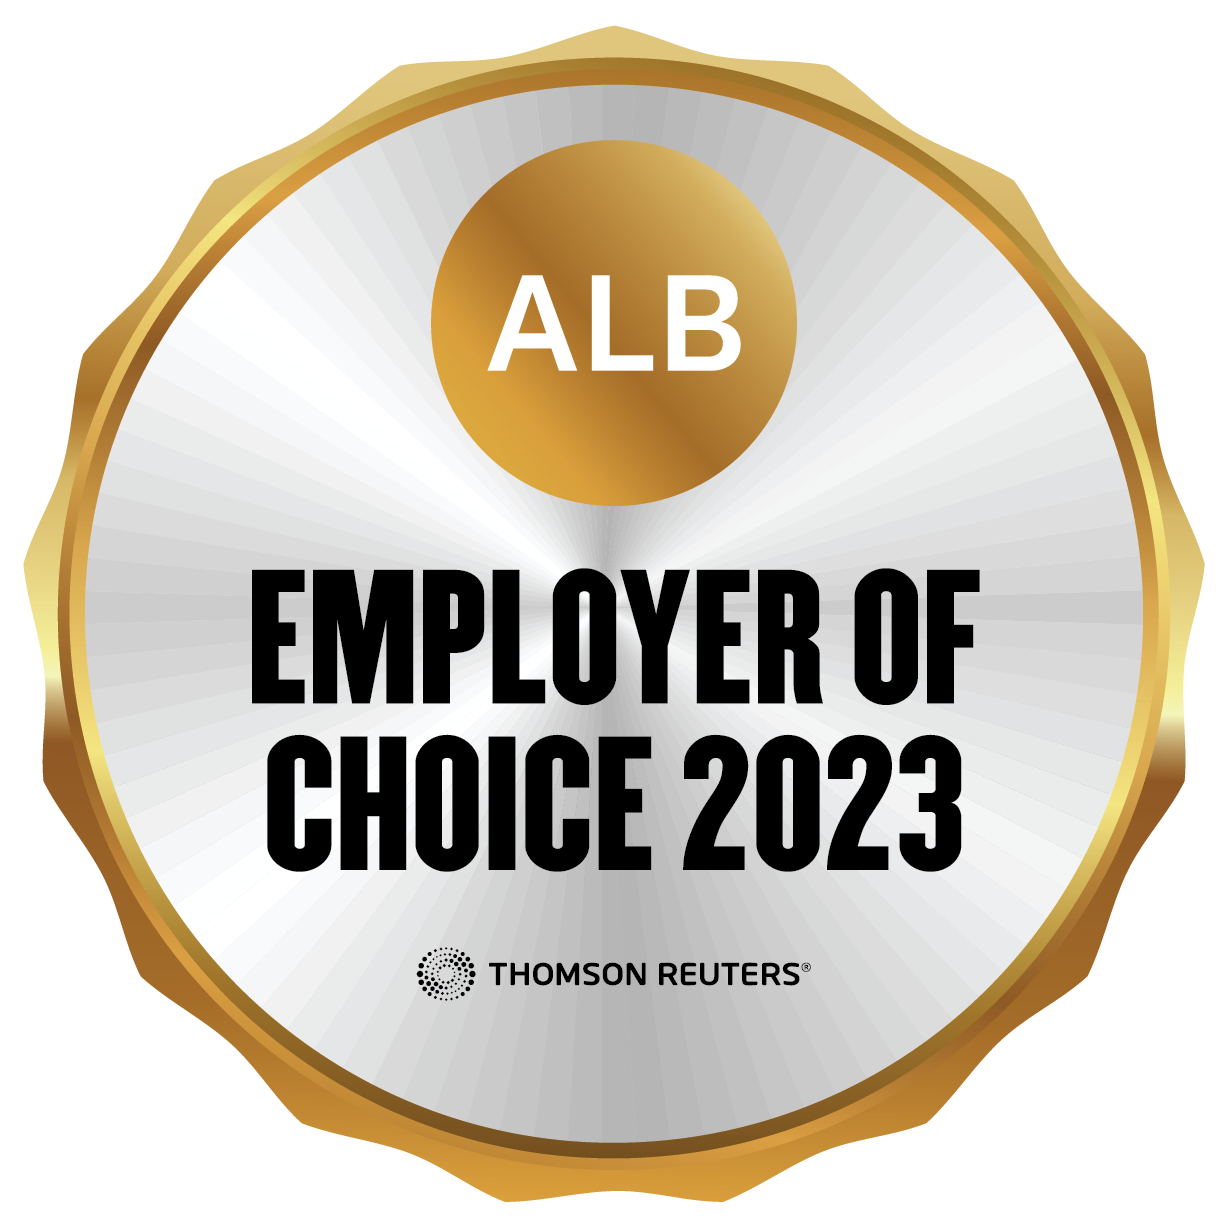 ALB Employer of Choice 2023